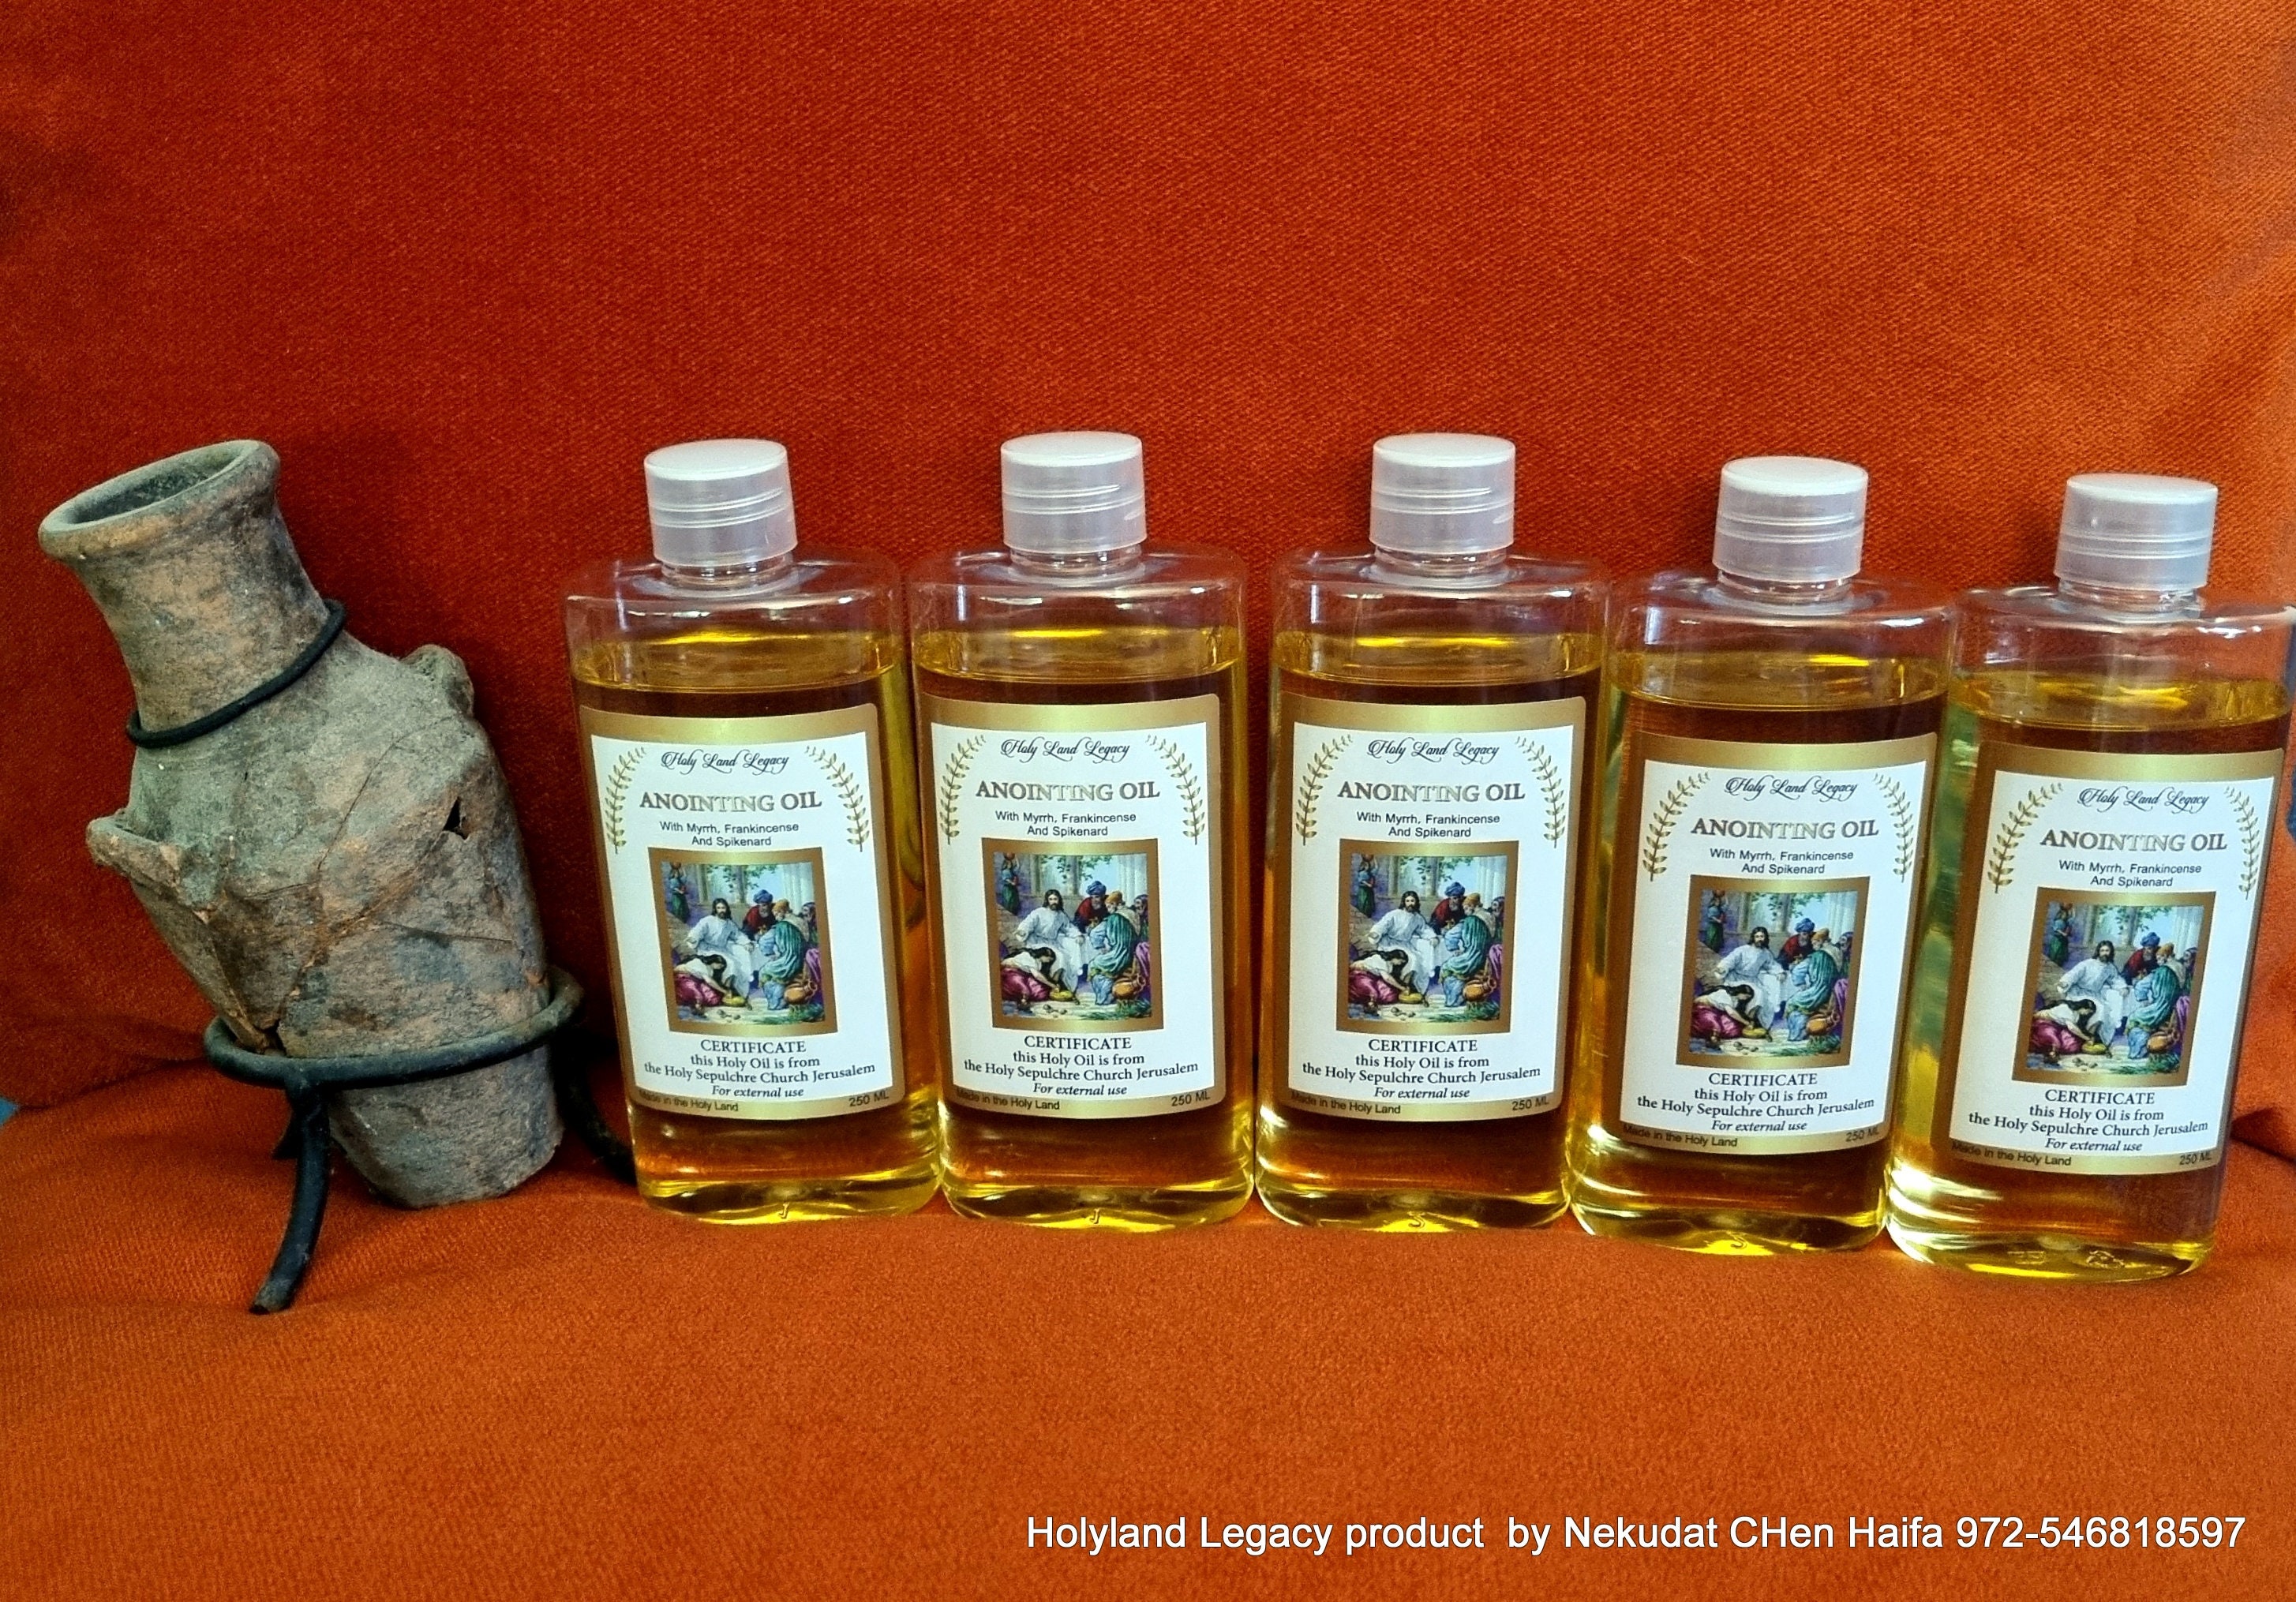 Frankincense & Myrrh (1/2 oz) Anointing Oil in Gift Box - Pathway